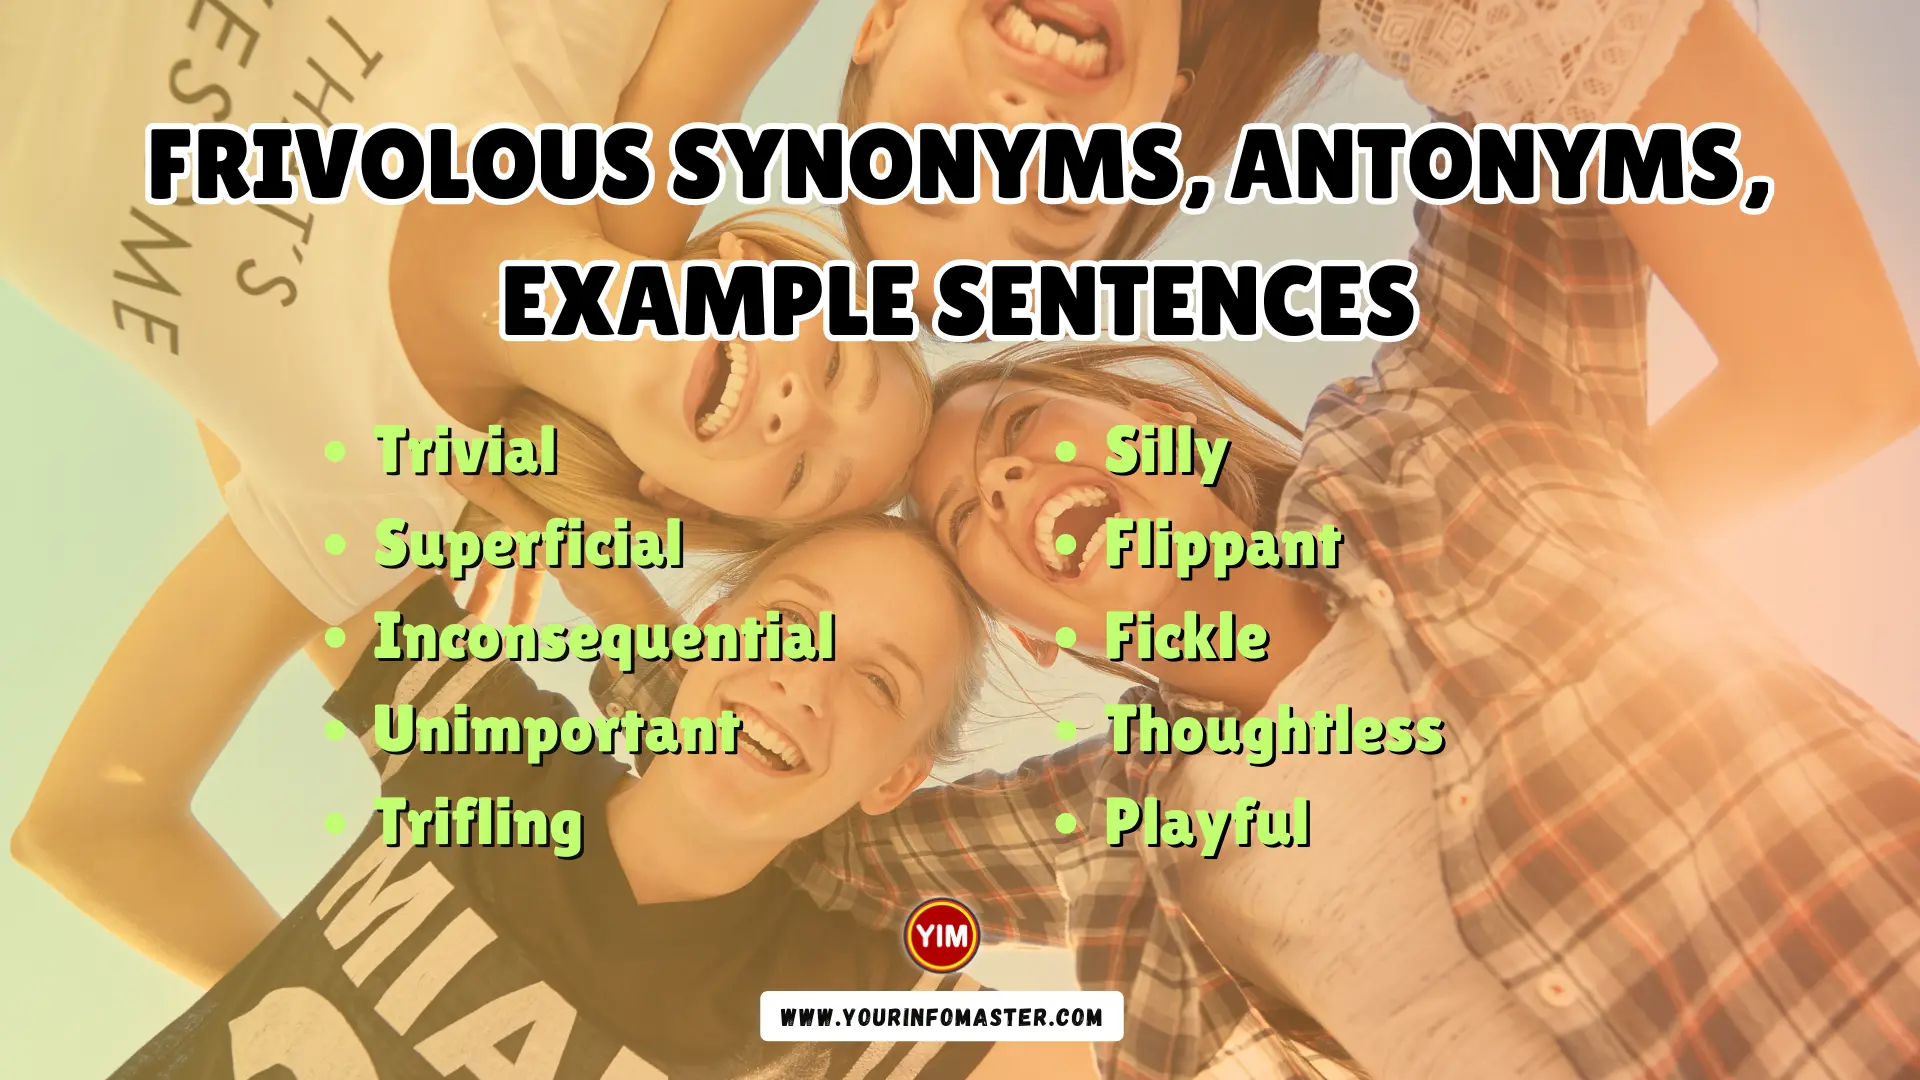 Frivolous Synonyms, Antonyms, Example Sentences